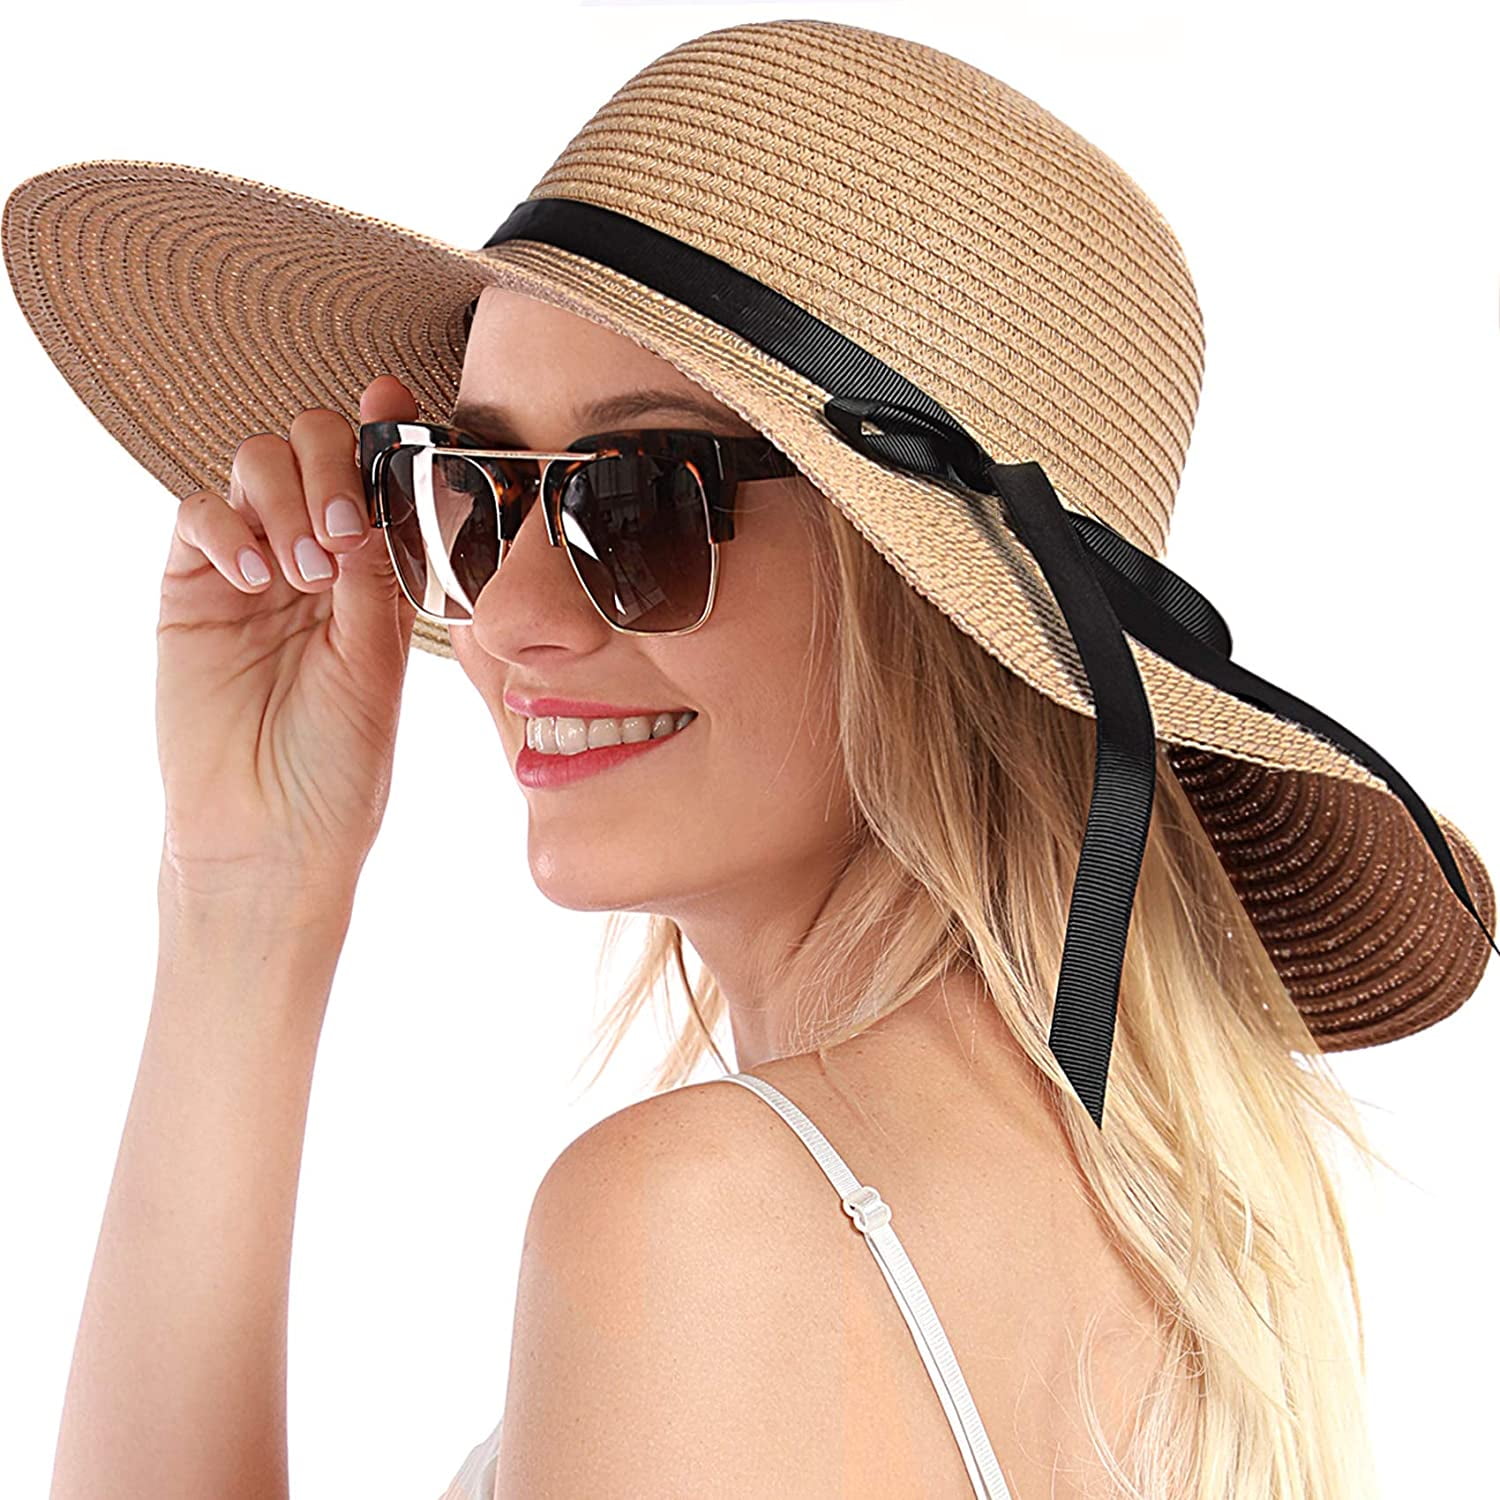 Women Empty Top Straw Hats Lady Bicycle Sun Protection Visor Beach Cap Sun Hats 